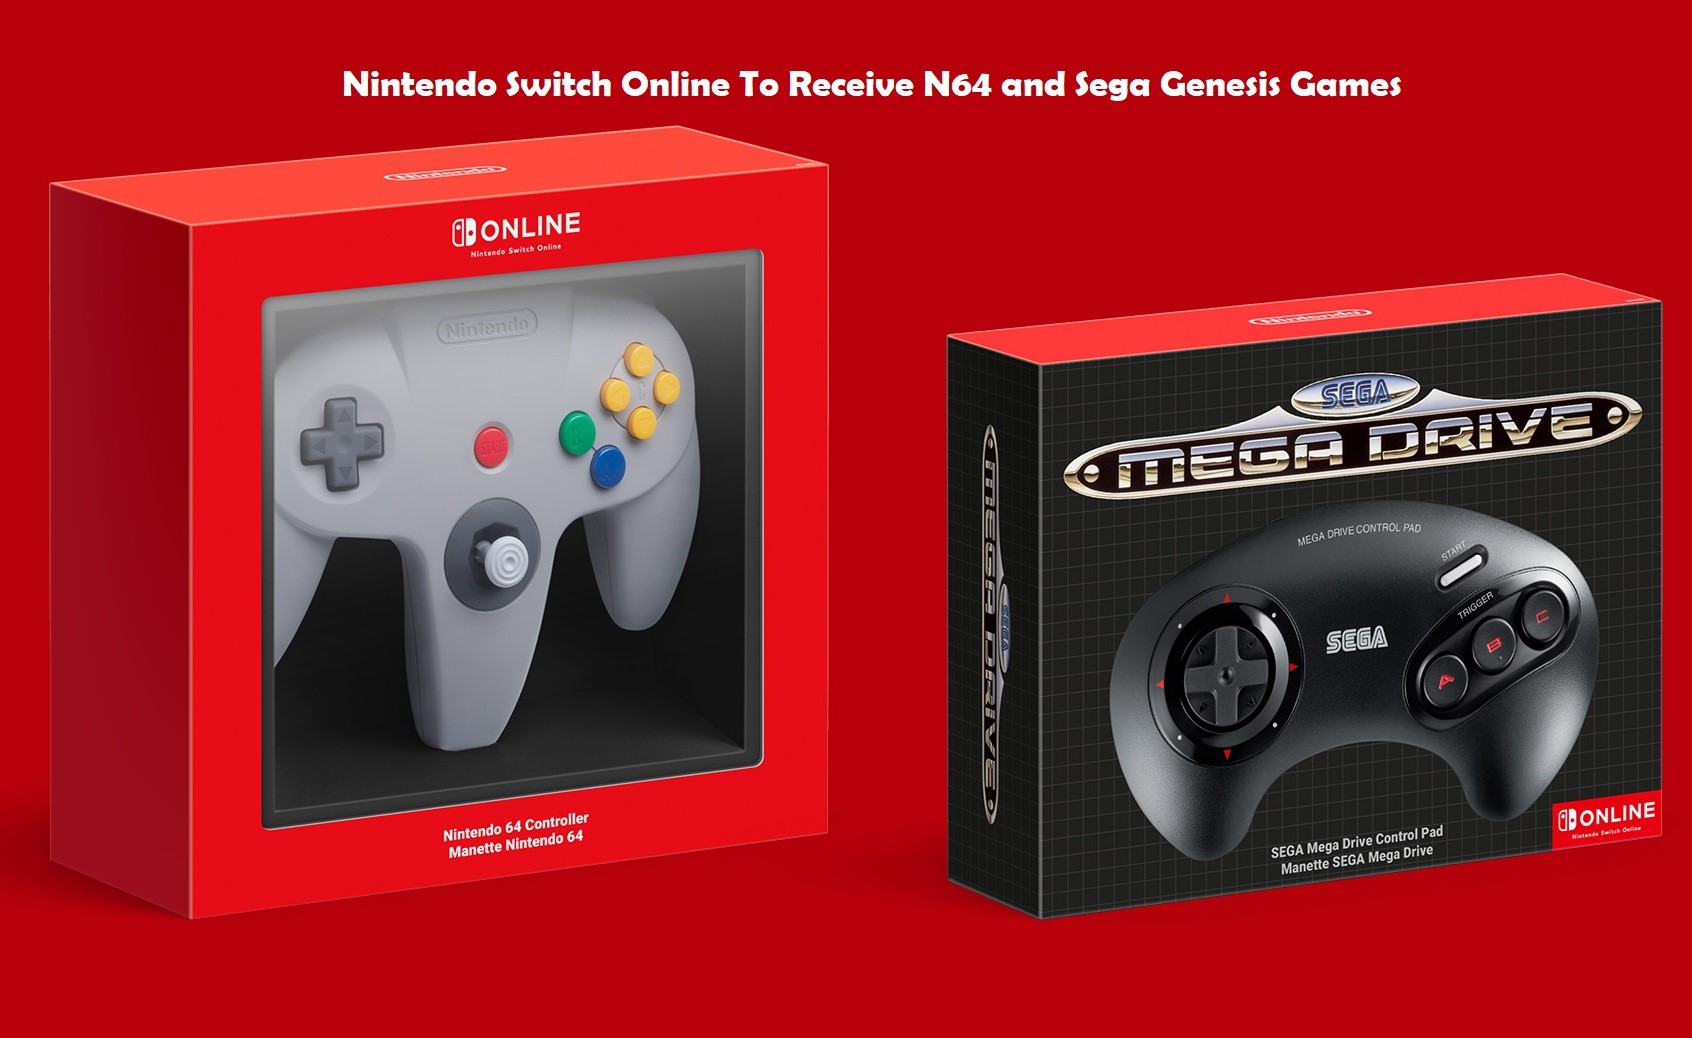 Nintendo Switch Online To Receive N64 and Sega Genesis Games